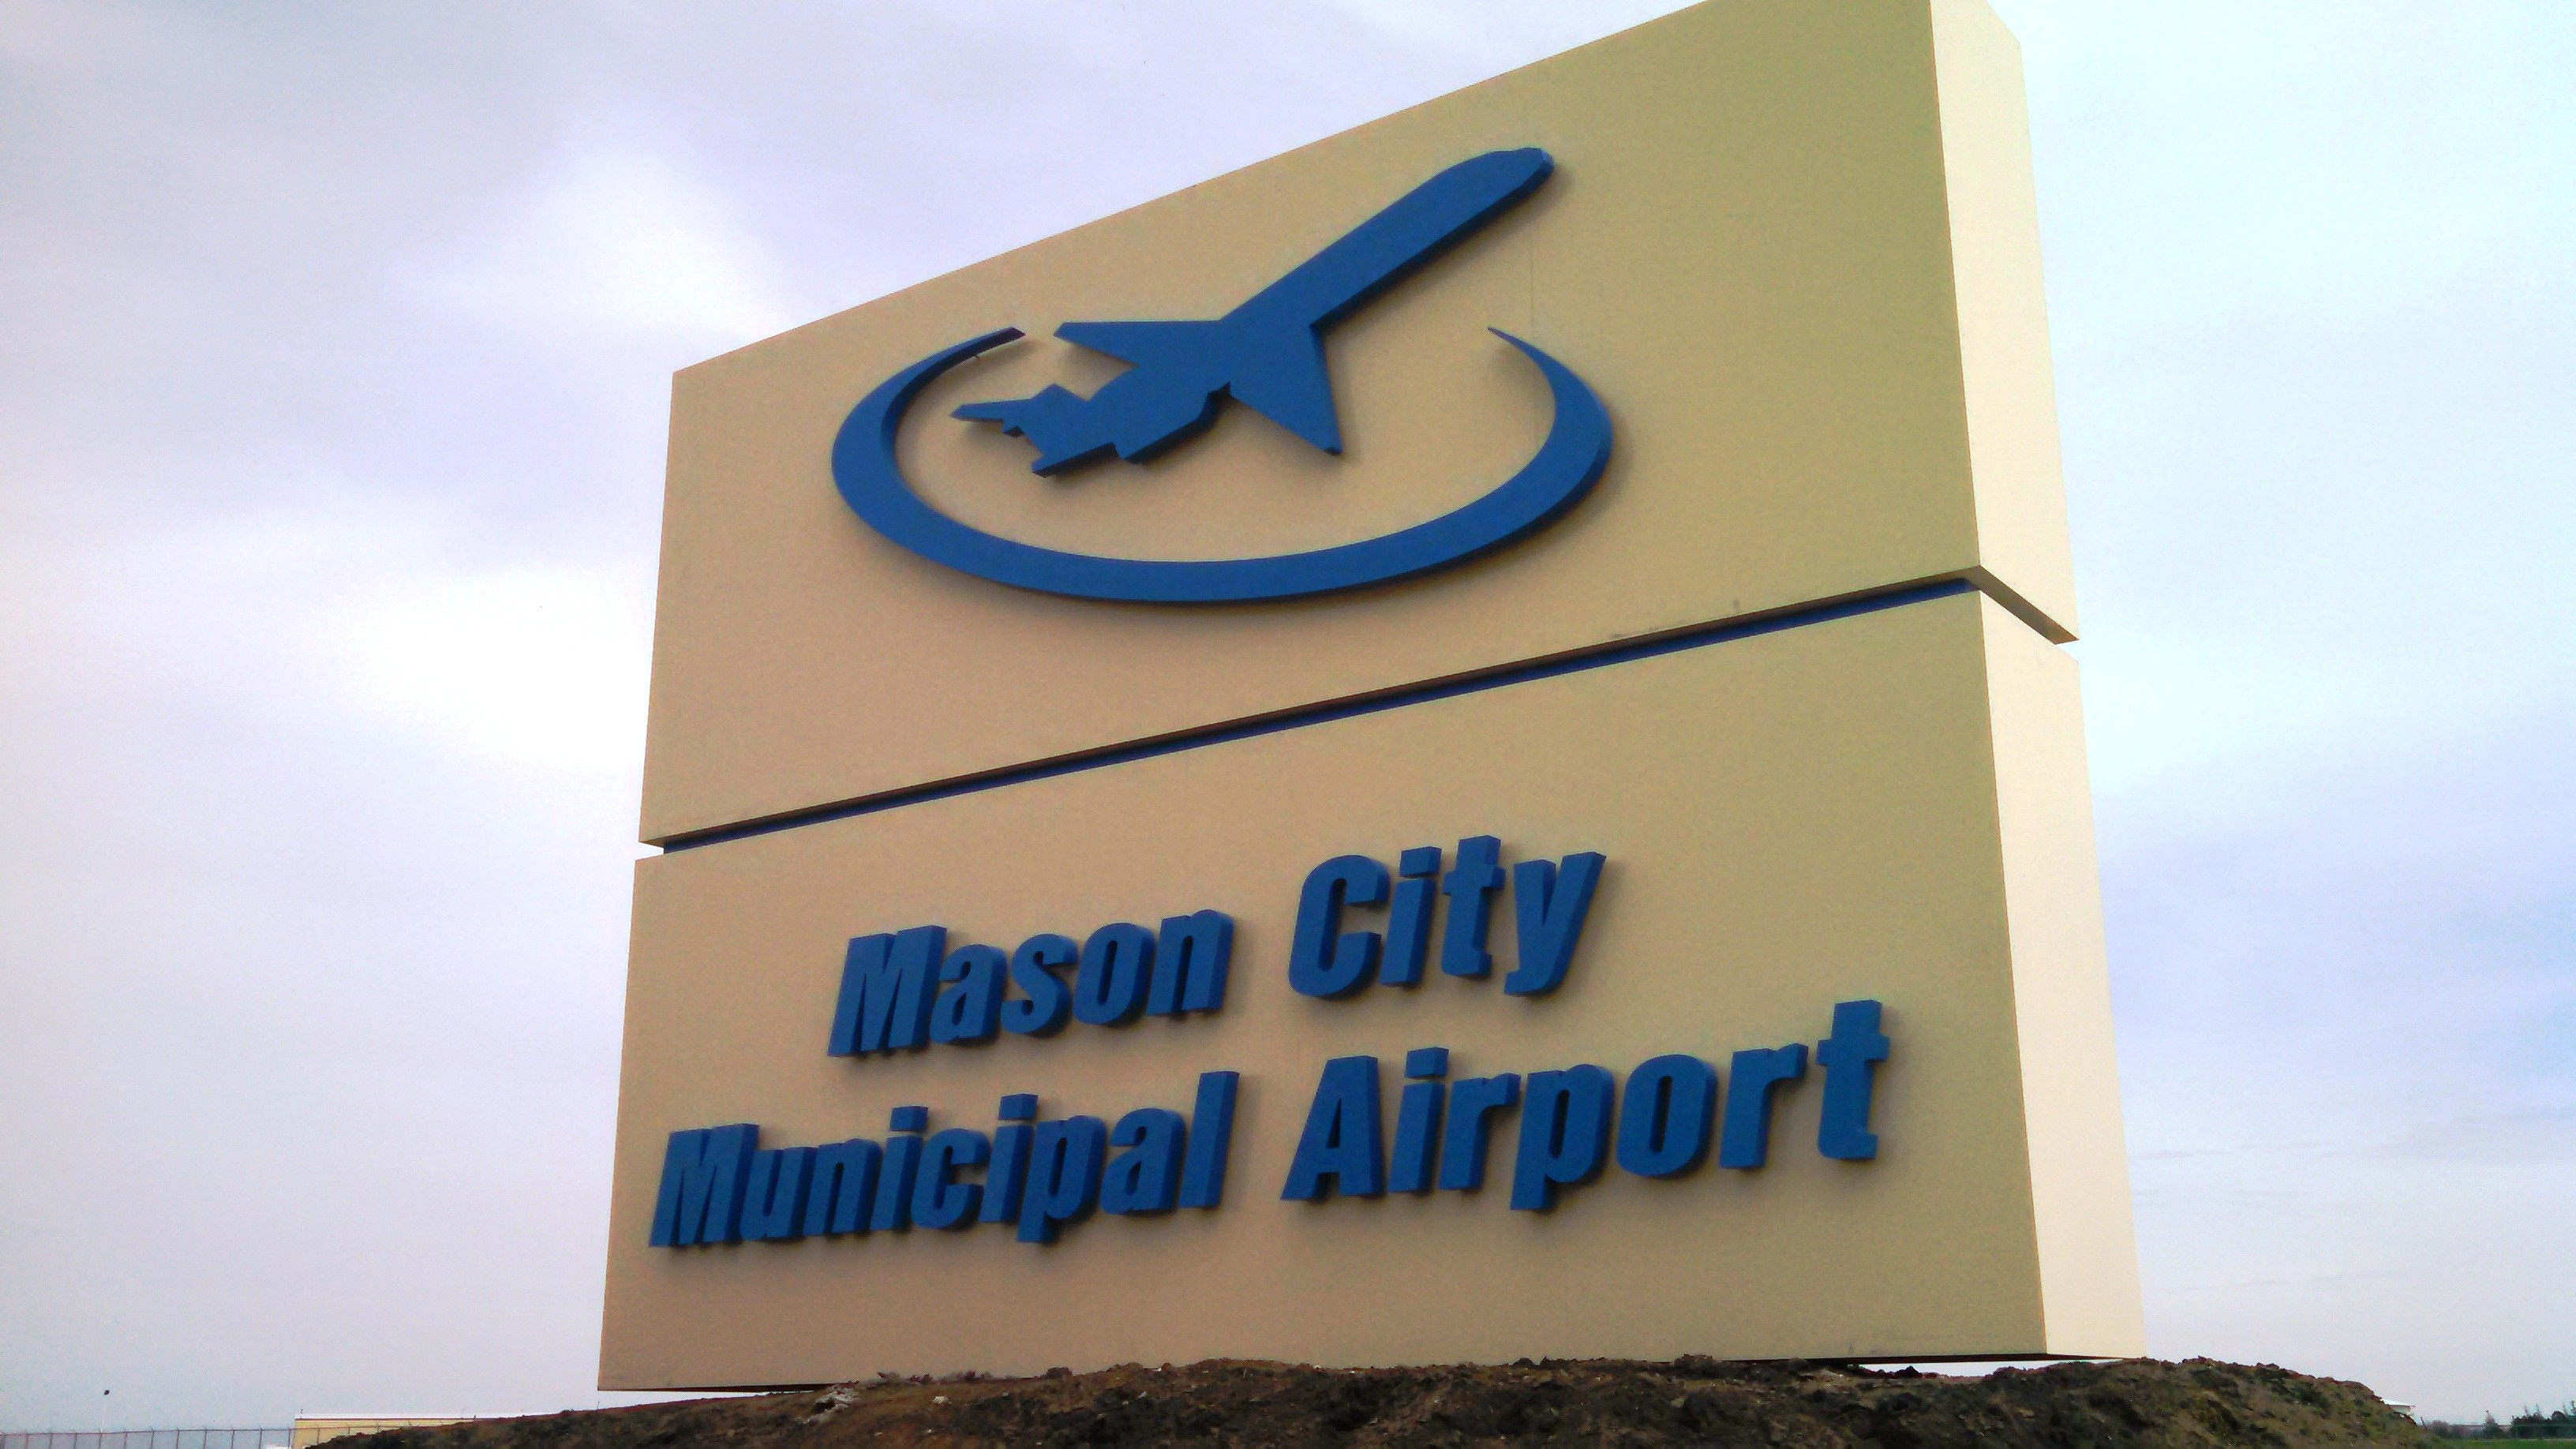 cavu mason city airport